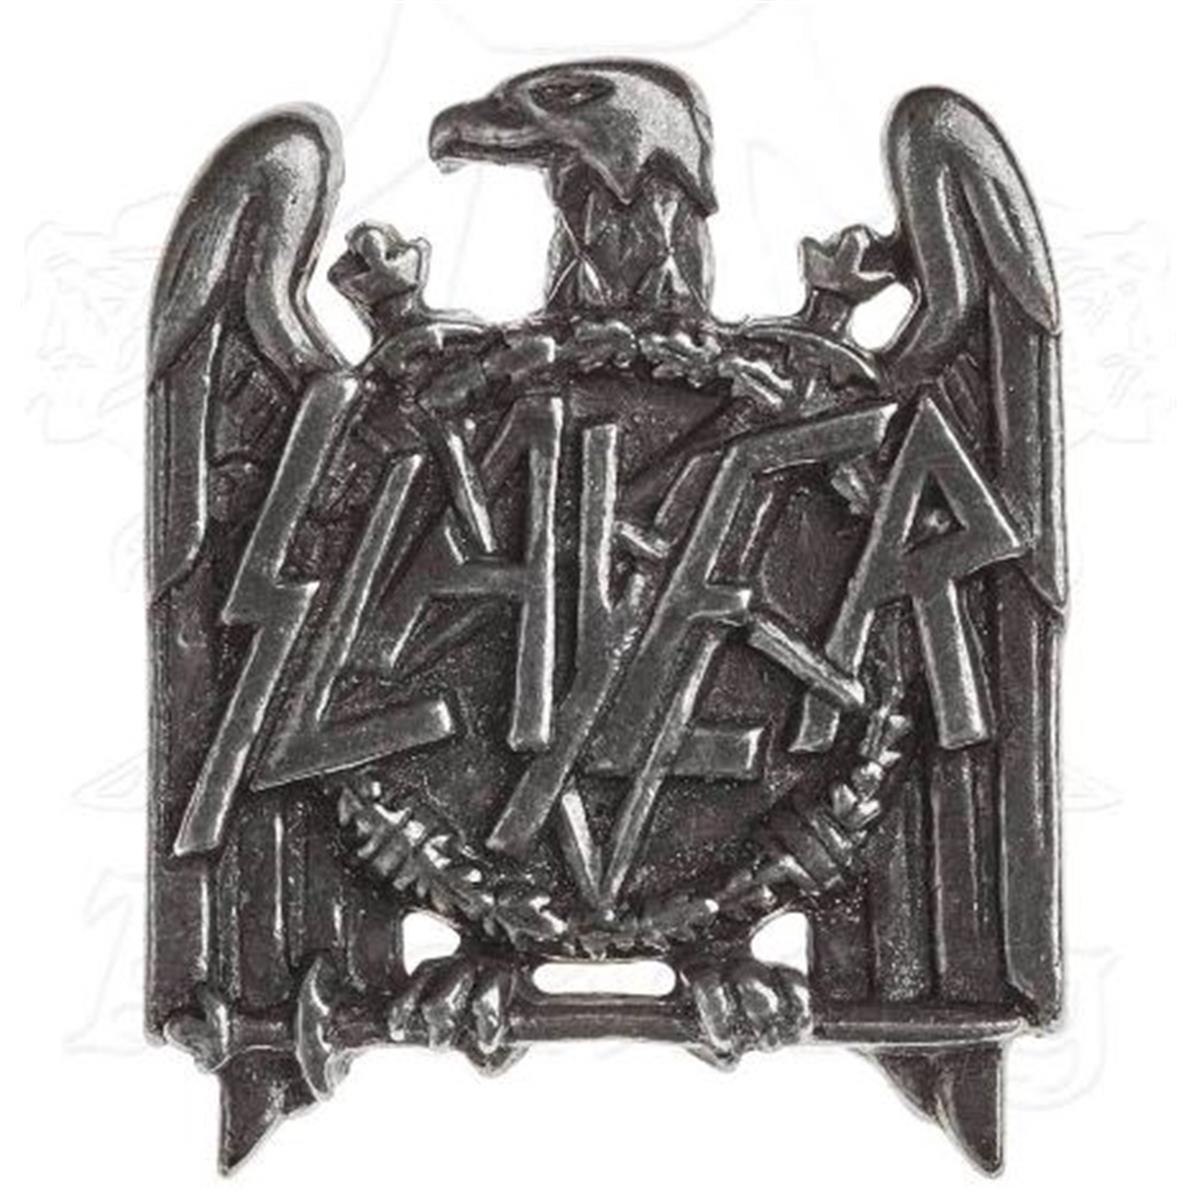 Pc504 Slayer Pin Badge, Eagle Logo